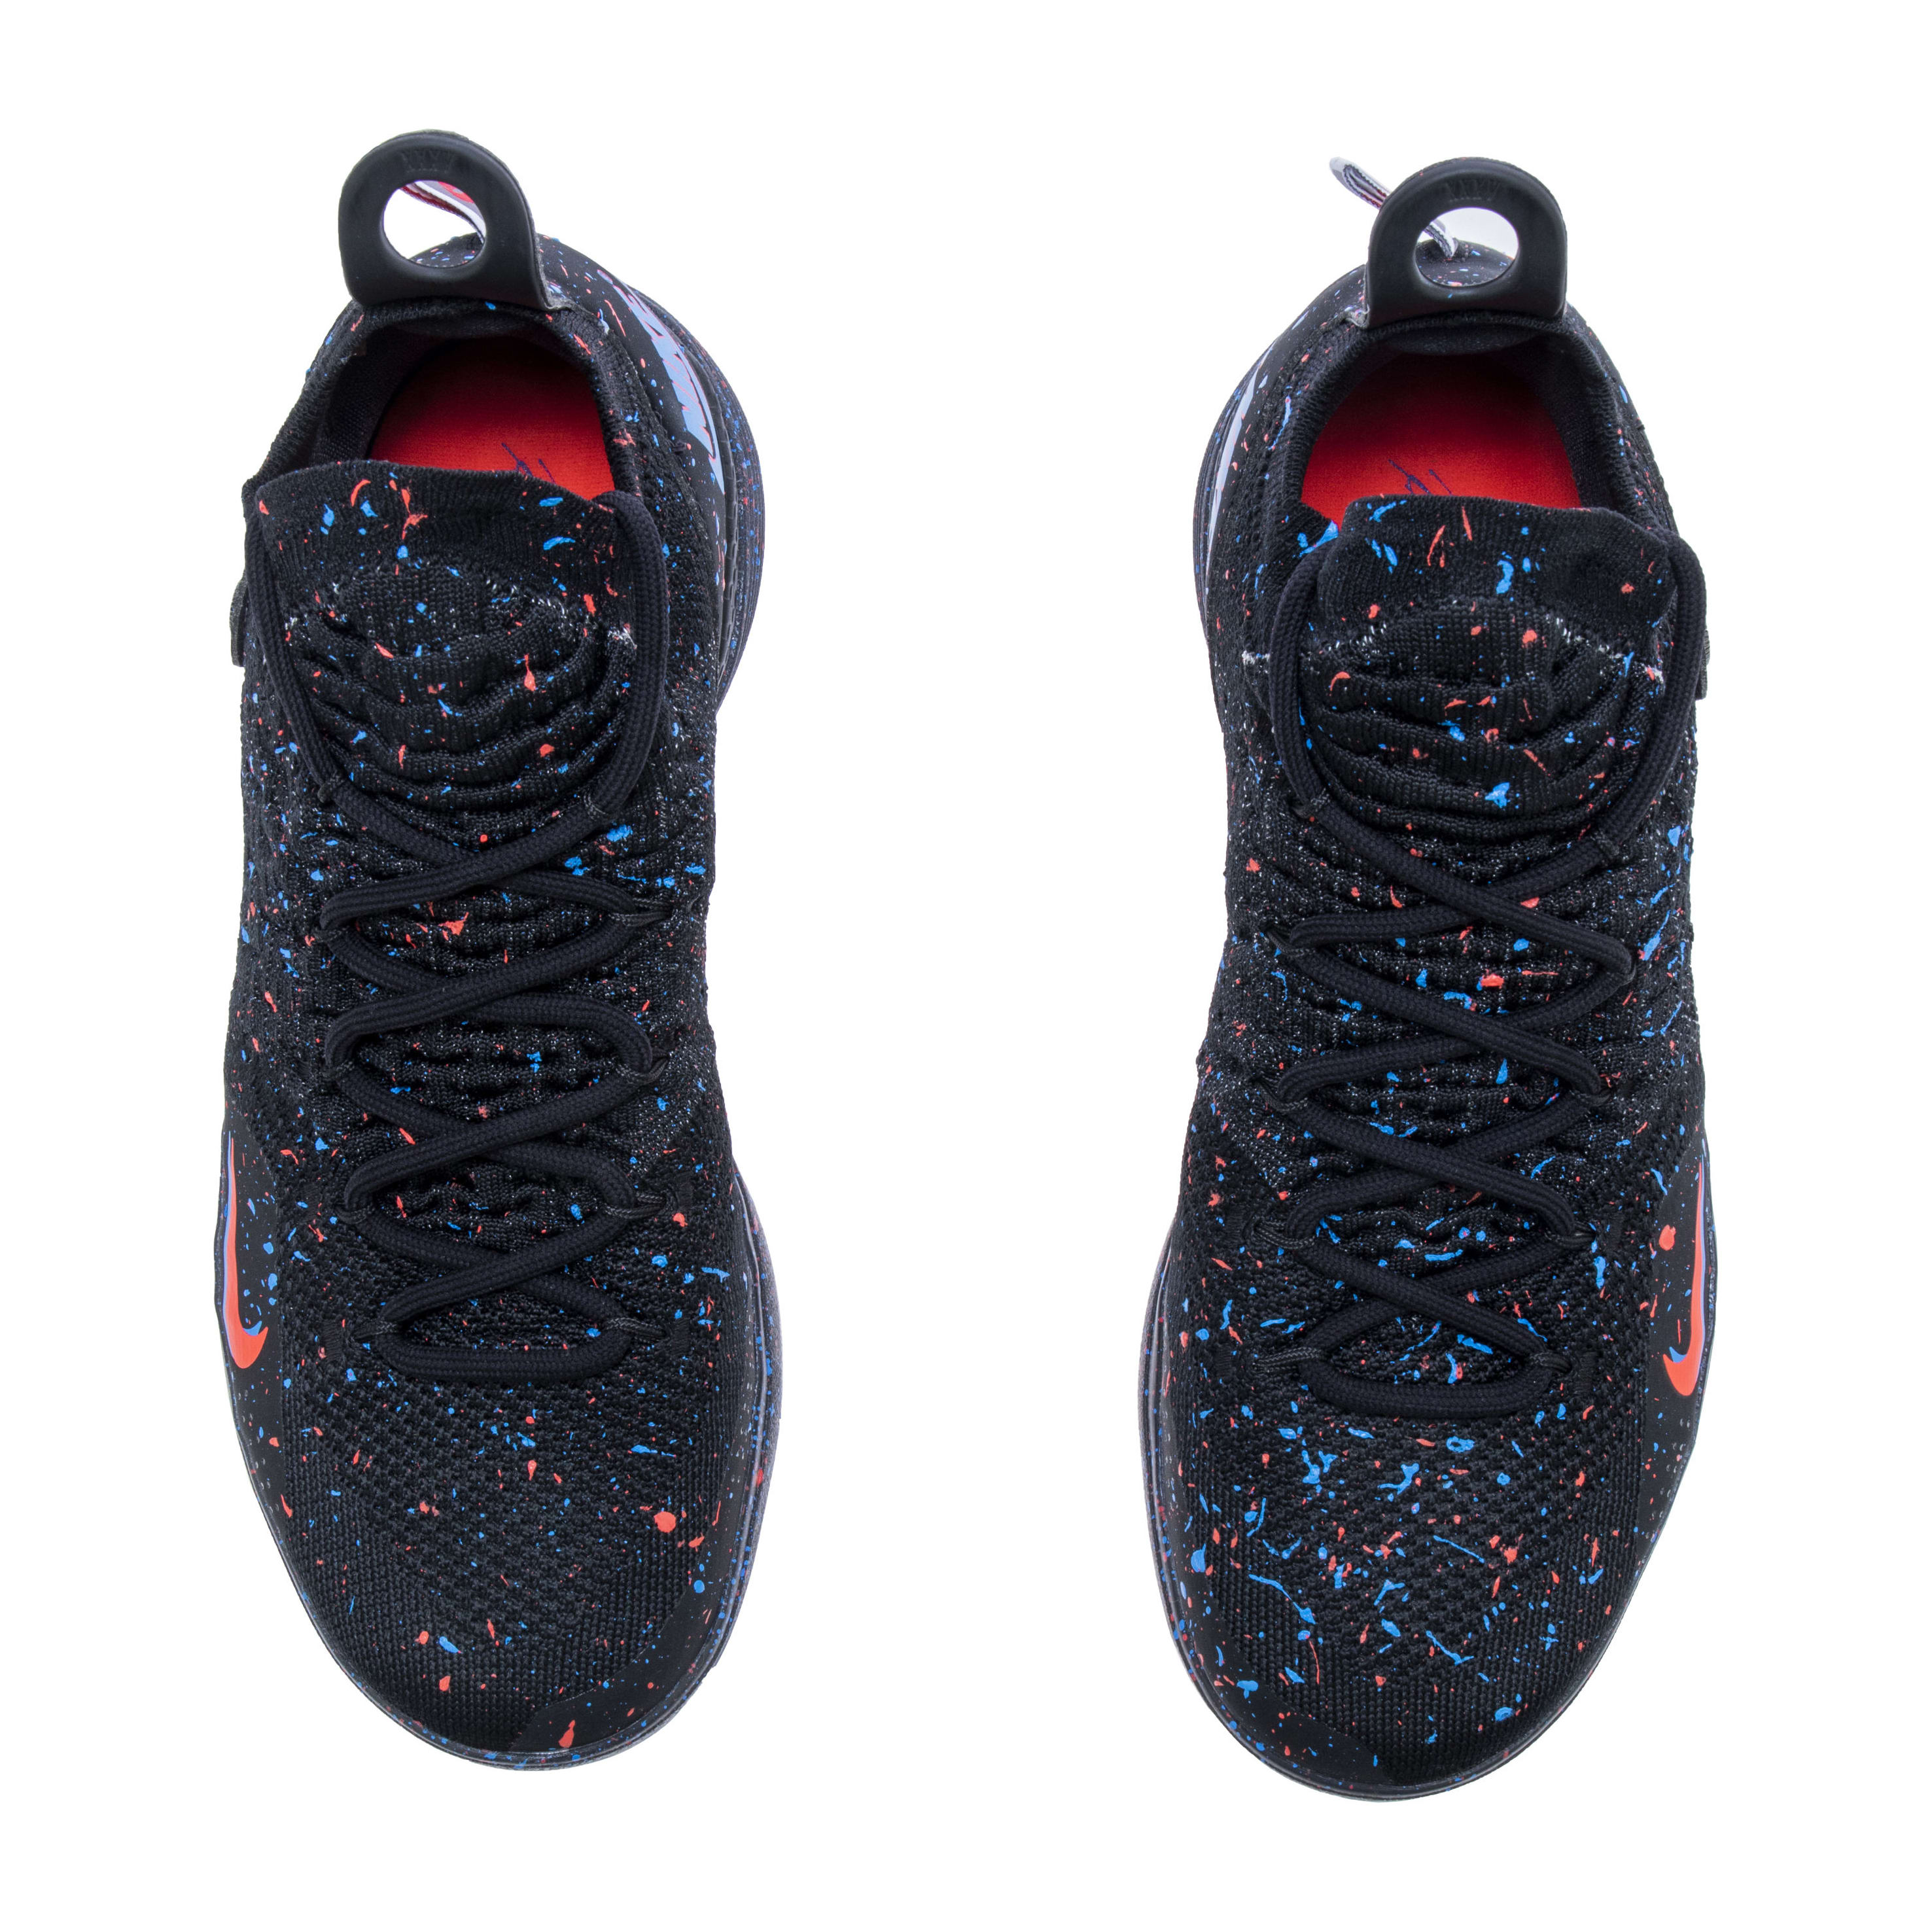 Nike KD 11 &#x27;Just Do It&#x27; Black/Bright Crimson-Photo Blue AO2604-007 (Top)